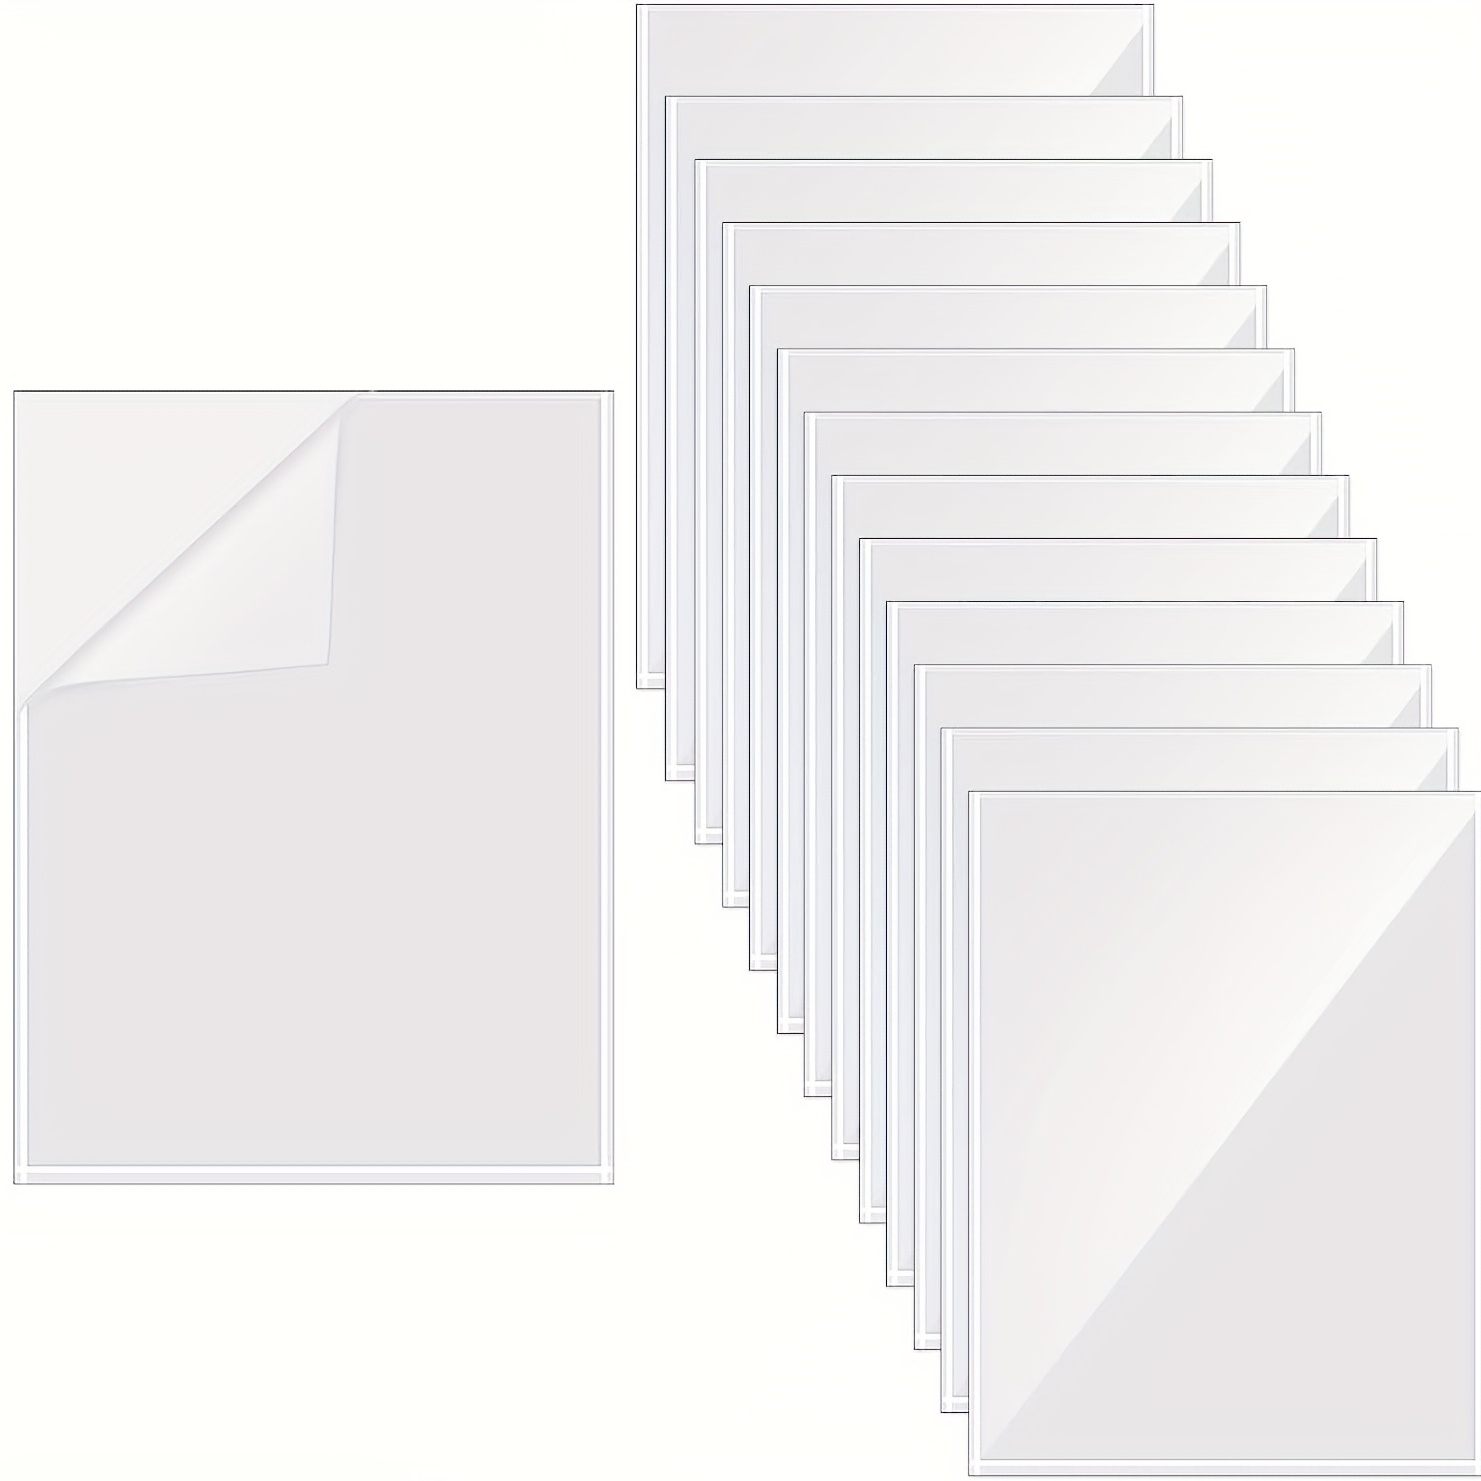  Sticker Laminating Sheets, Cuttable A4 Laminating